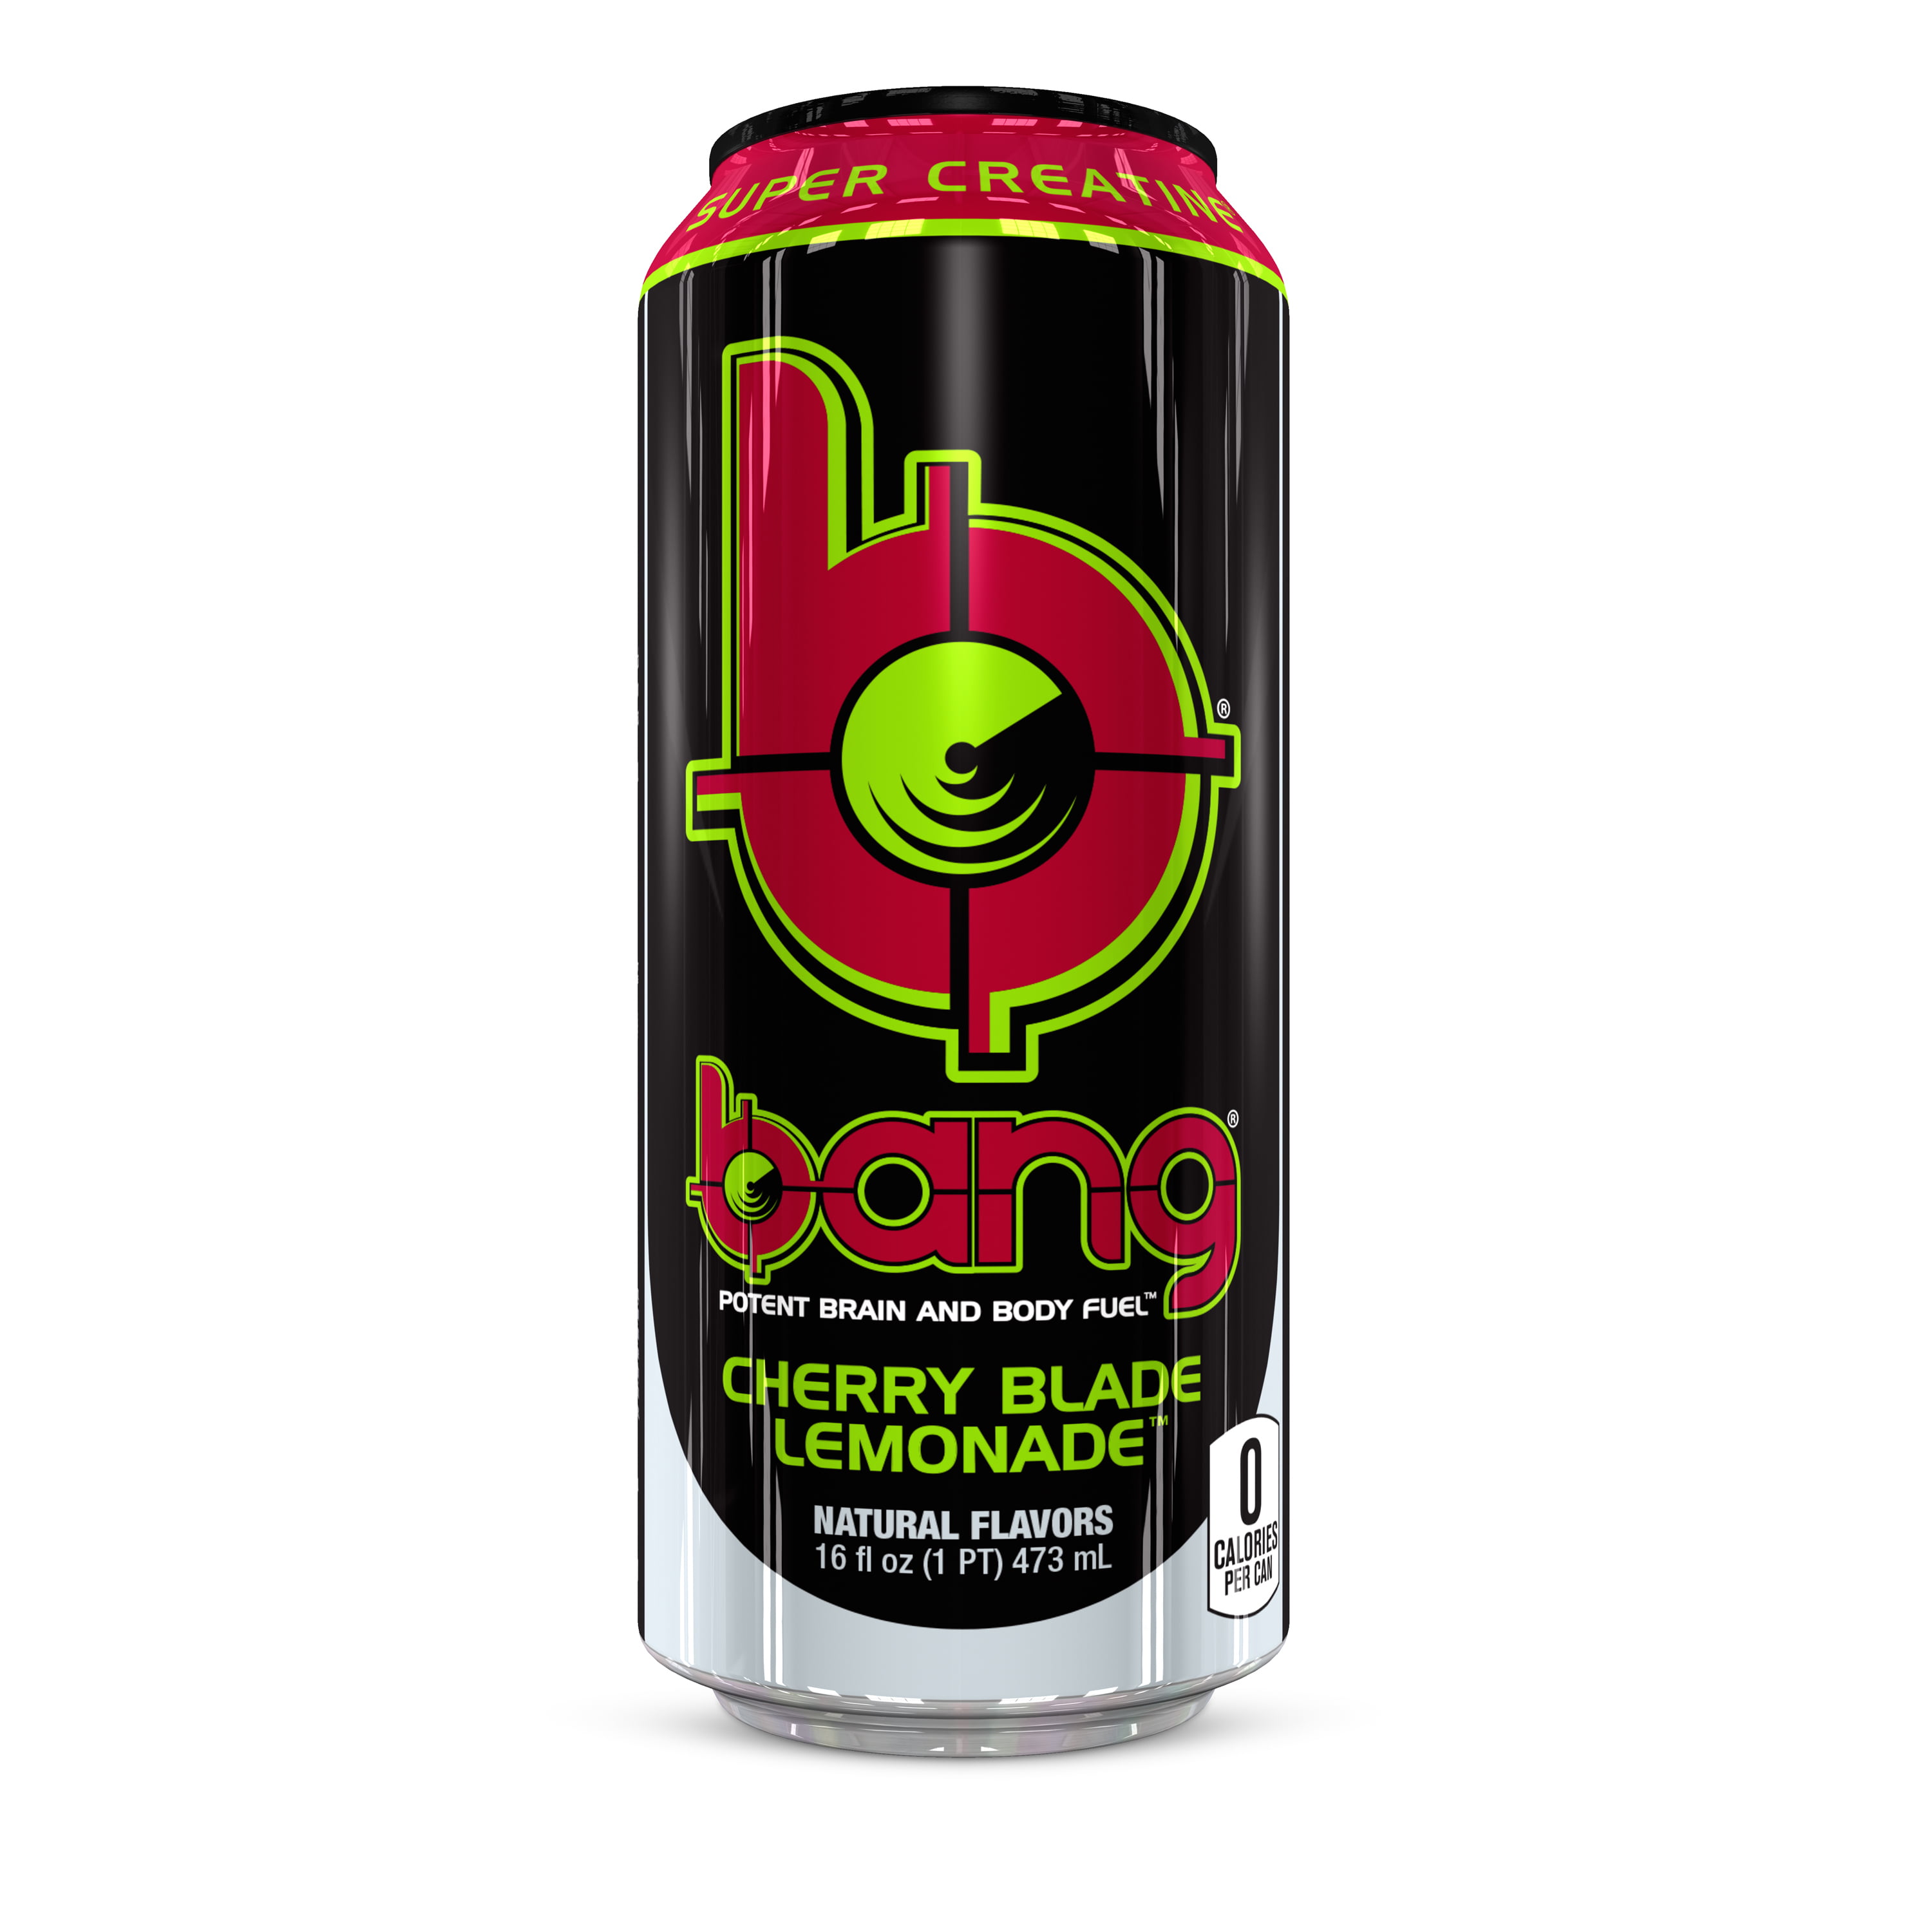 Bang Chery Blade Lemonade Energy Drink With Super Creatine Oz Can